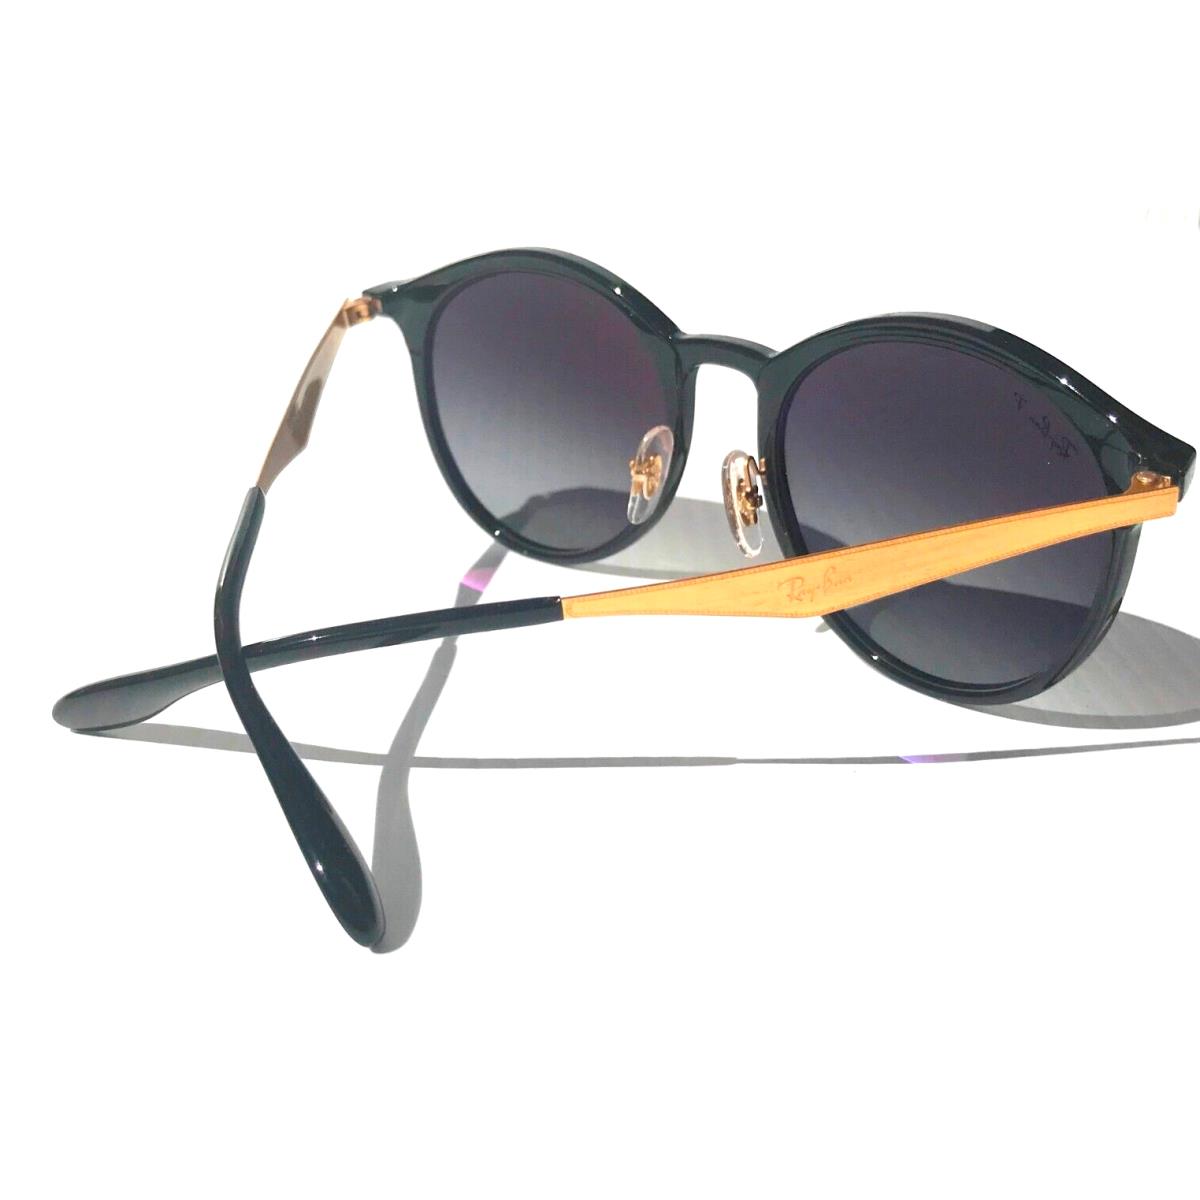 Ray-Ban sunglasses Emma - Frame: Black and Gold, Lens: Grey 3